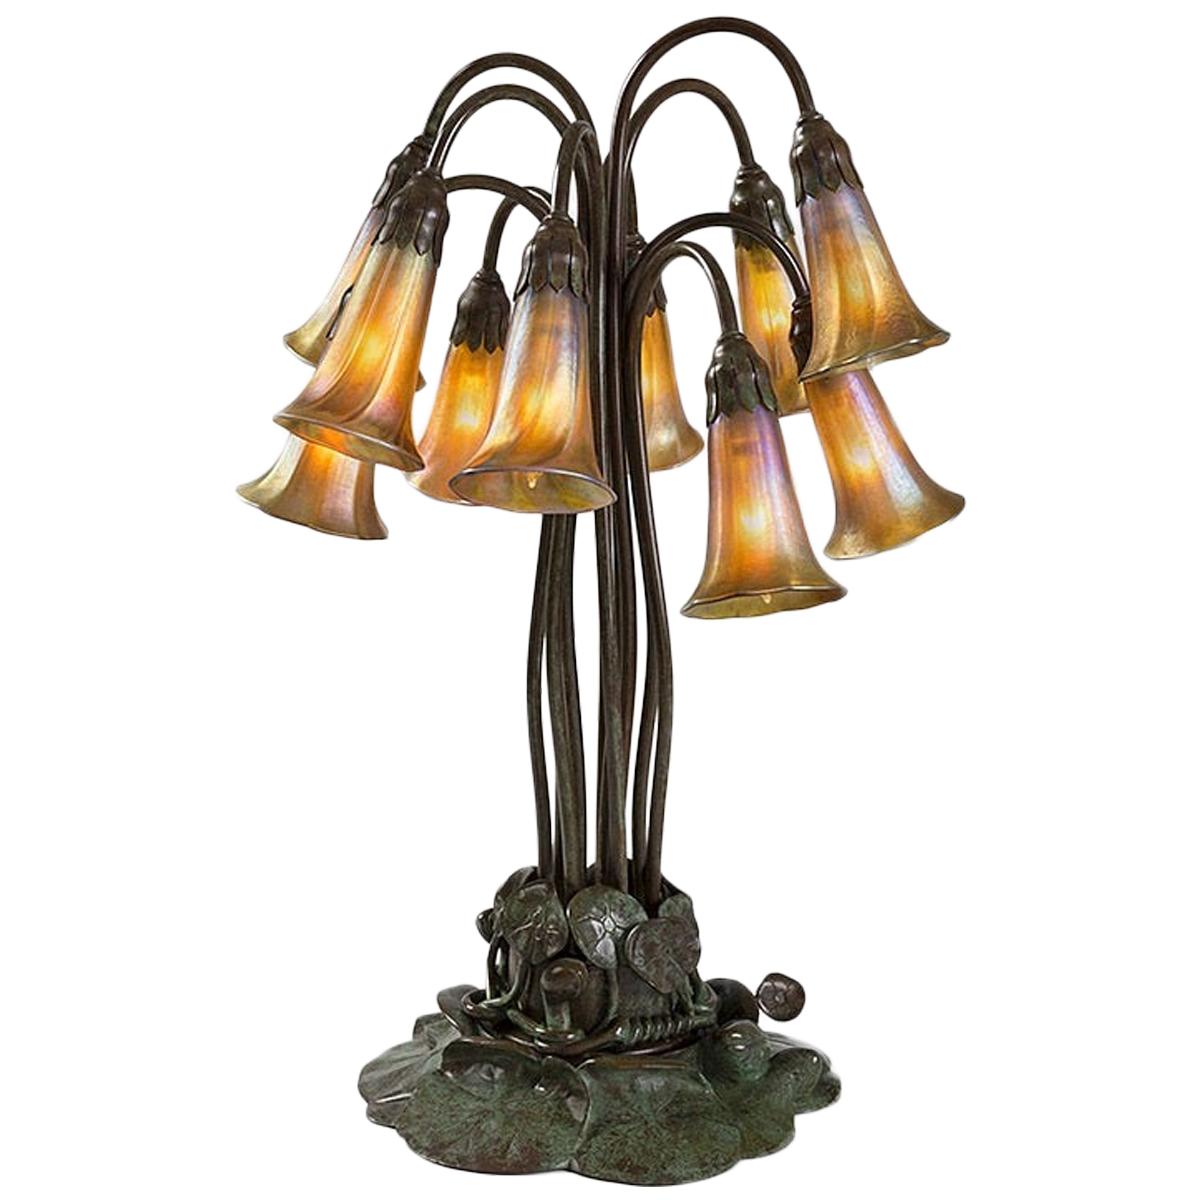 Tiffany Studios "Ten-Light Lily" Table Lamp